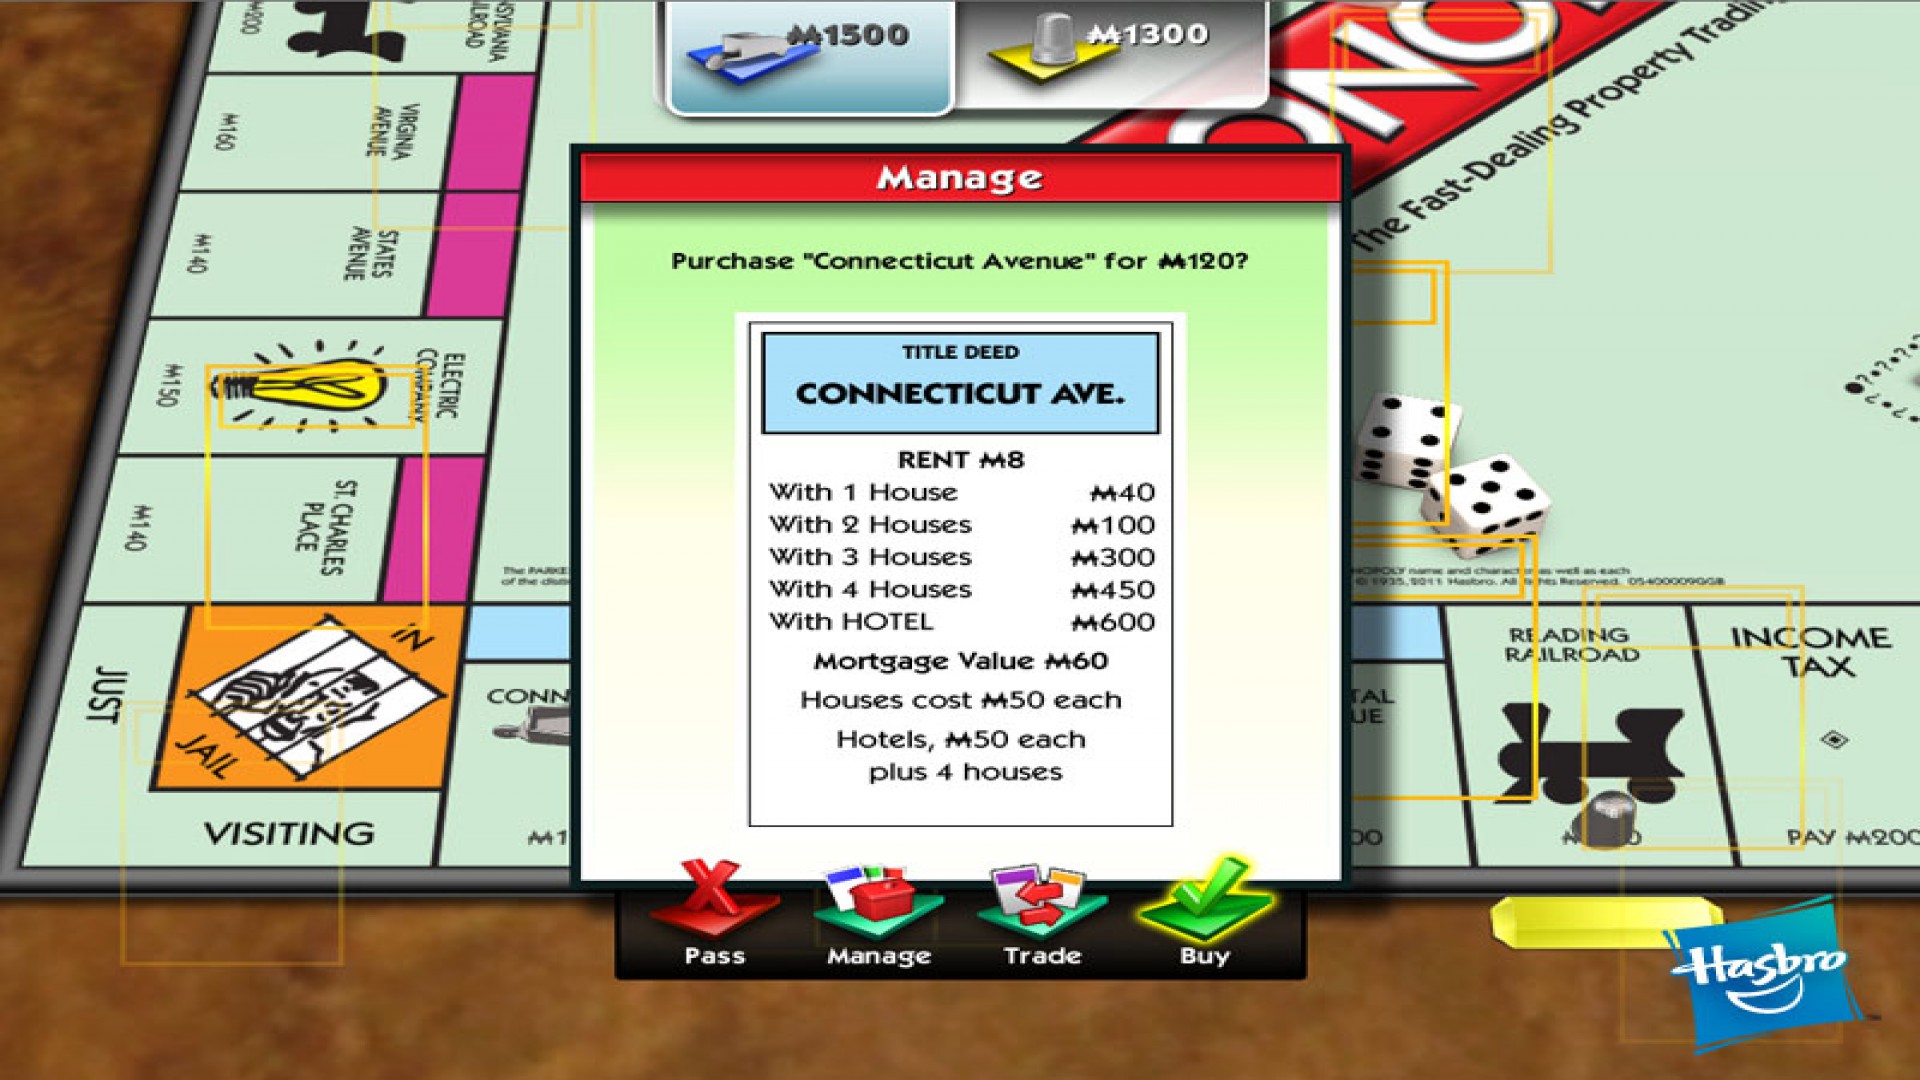 Monopoly screenshot